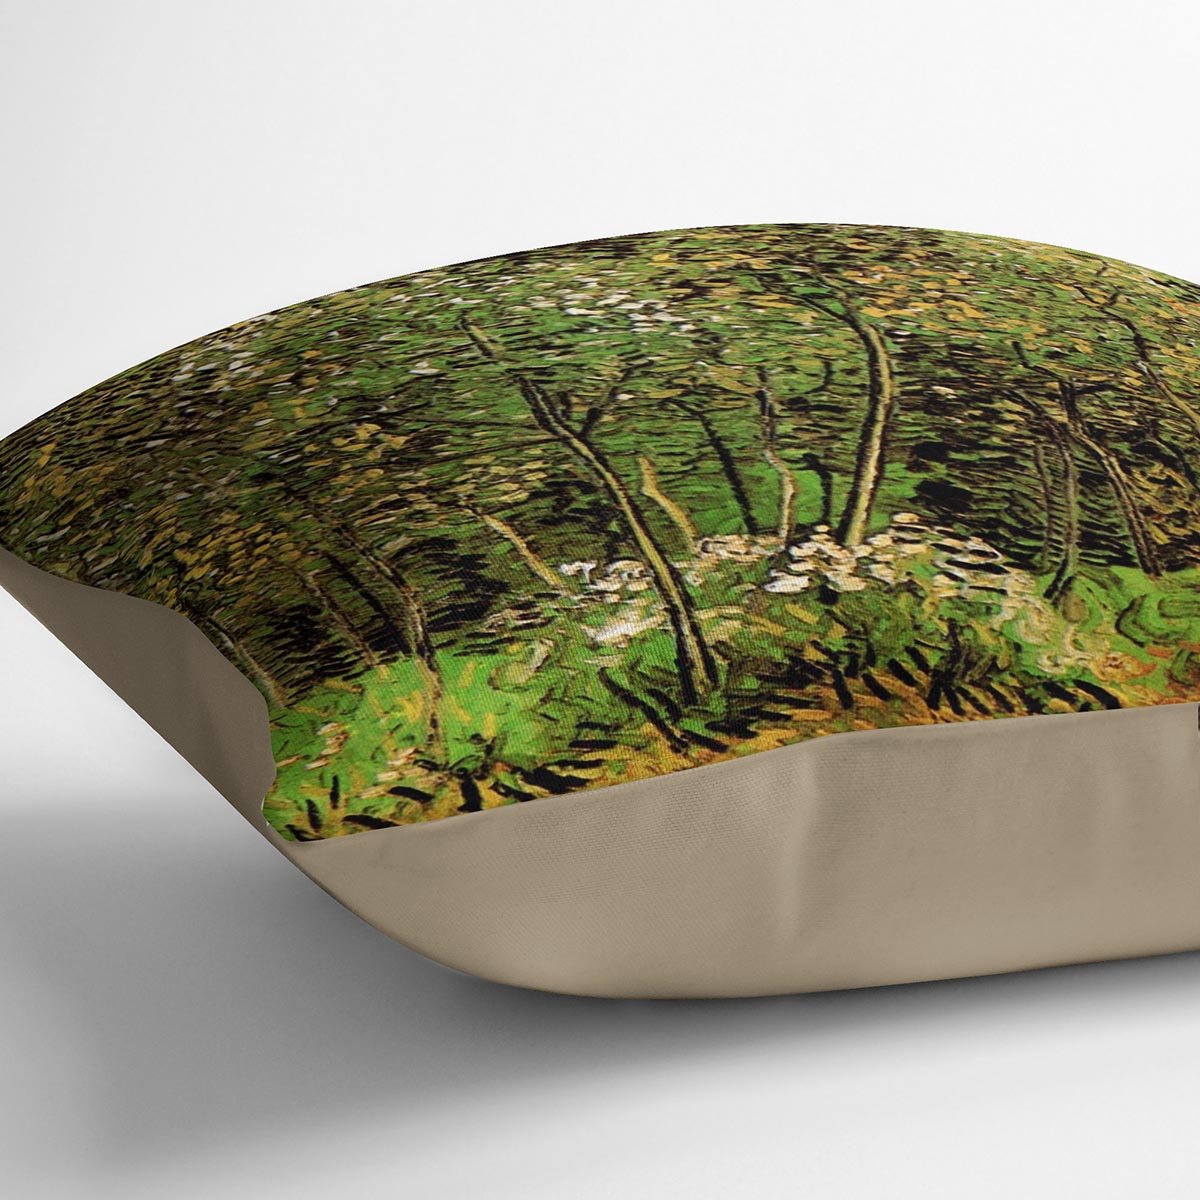 The Grove by Van Gogh Throw Pillow